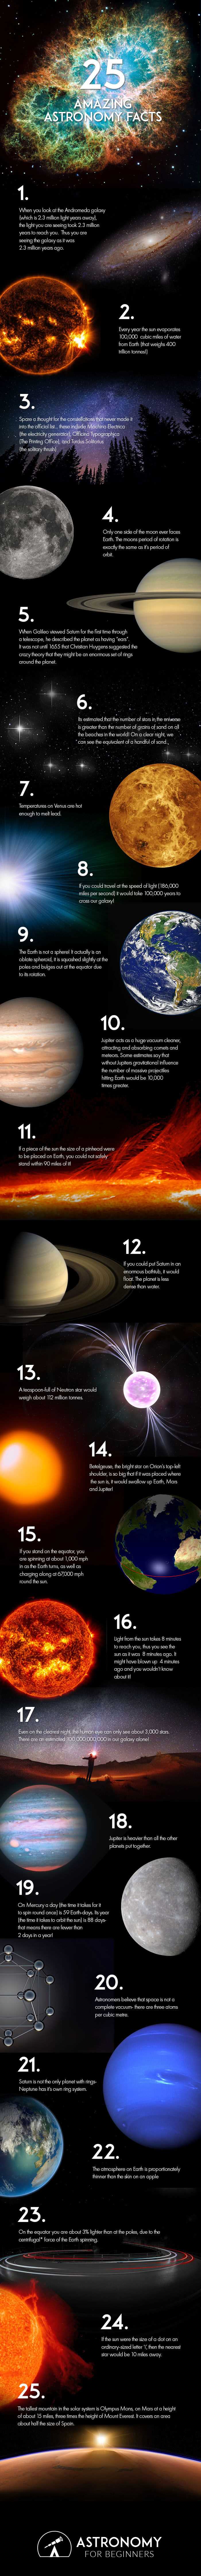 25 amazing astronomy facts